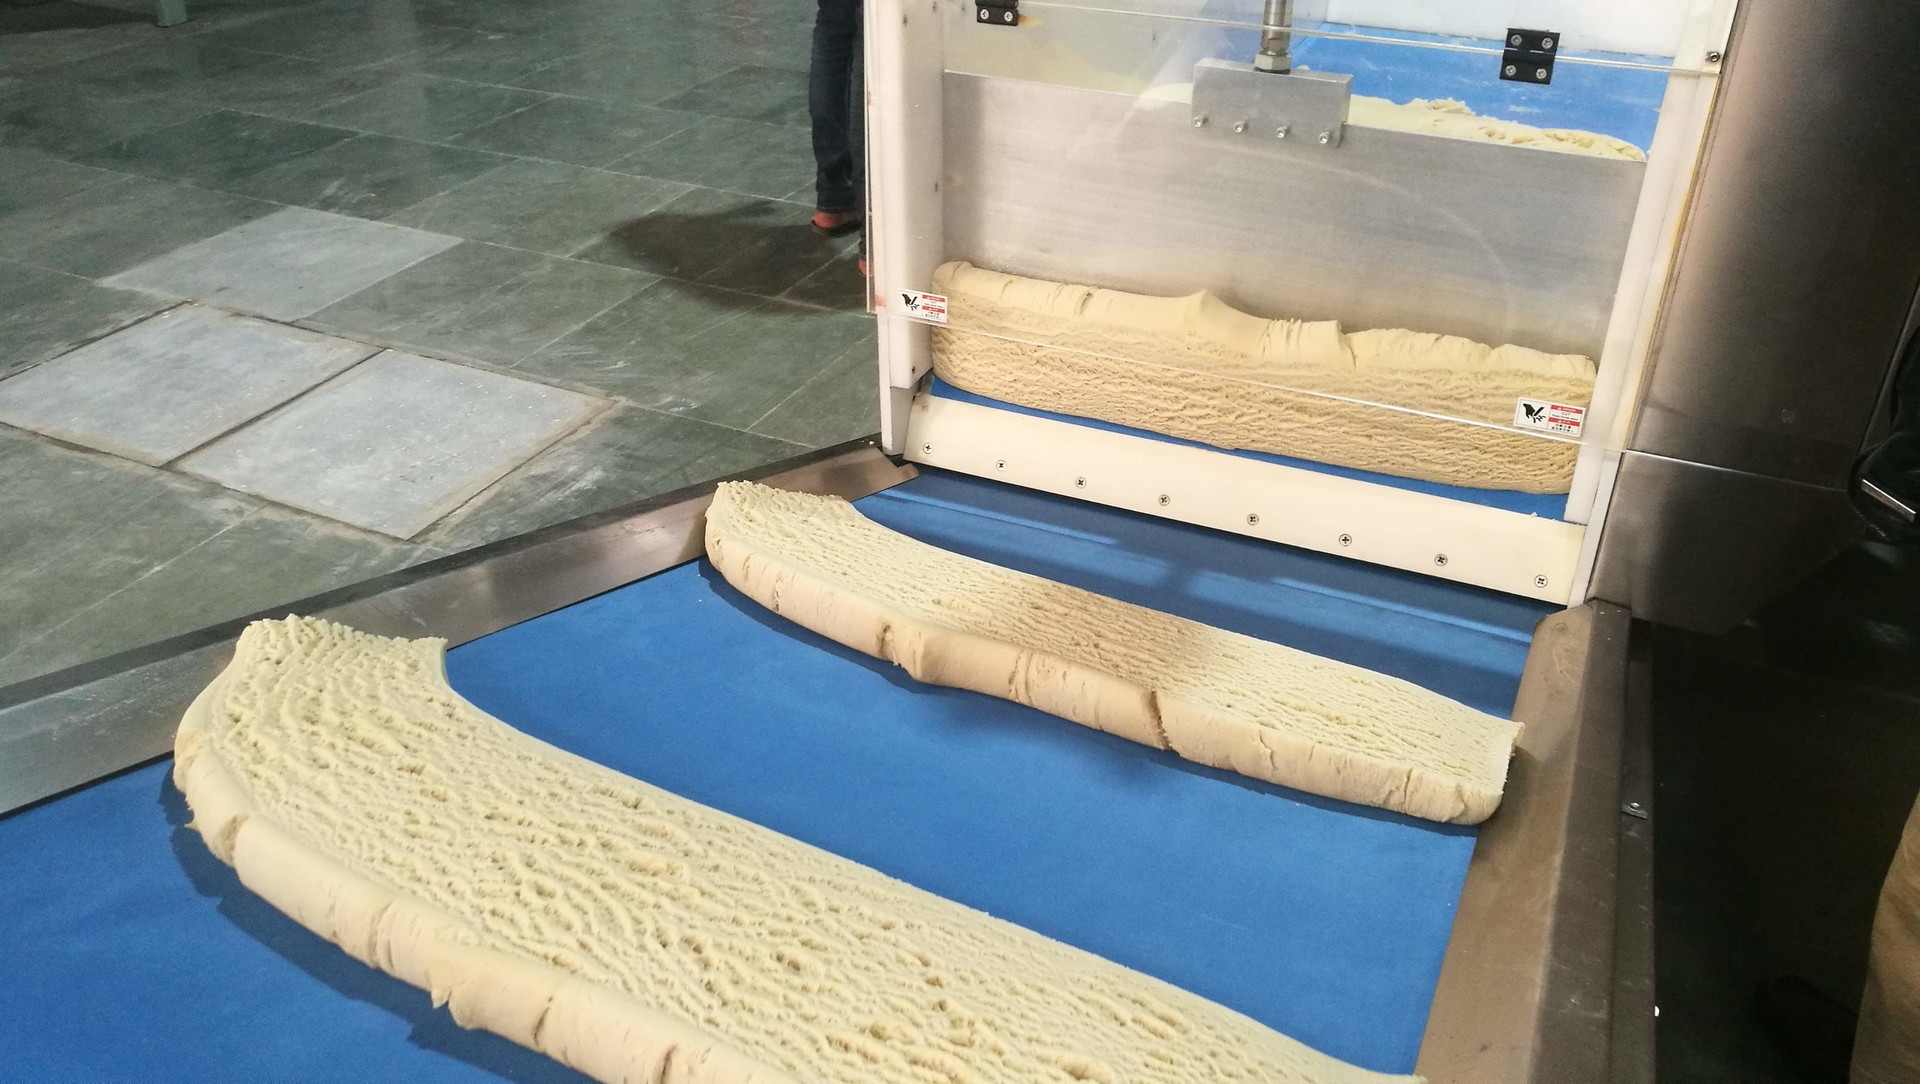 Hard dough cutting machine and Dough climbing conveyor